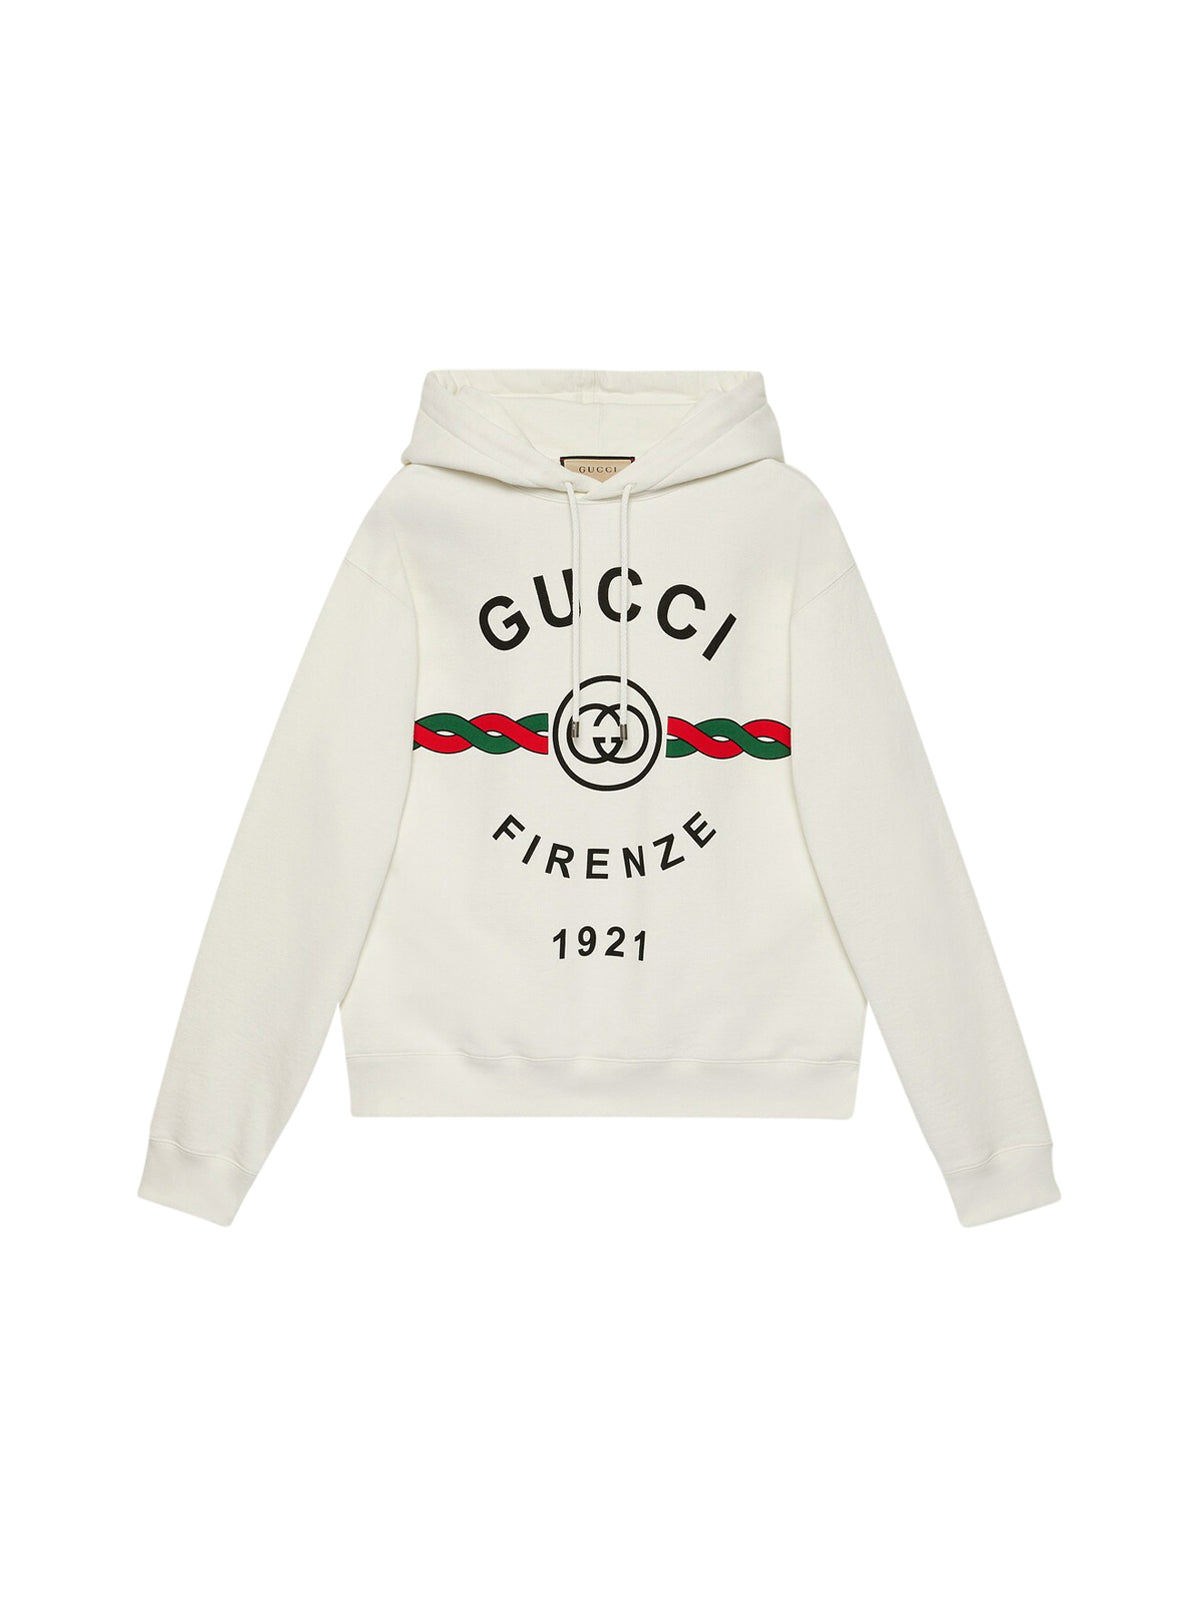 "Gucci Firenze 1921" cotton hoodie